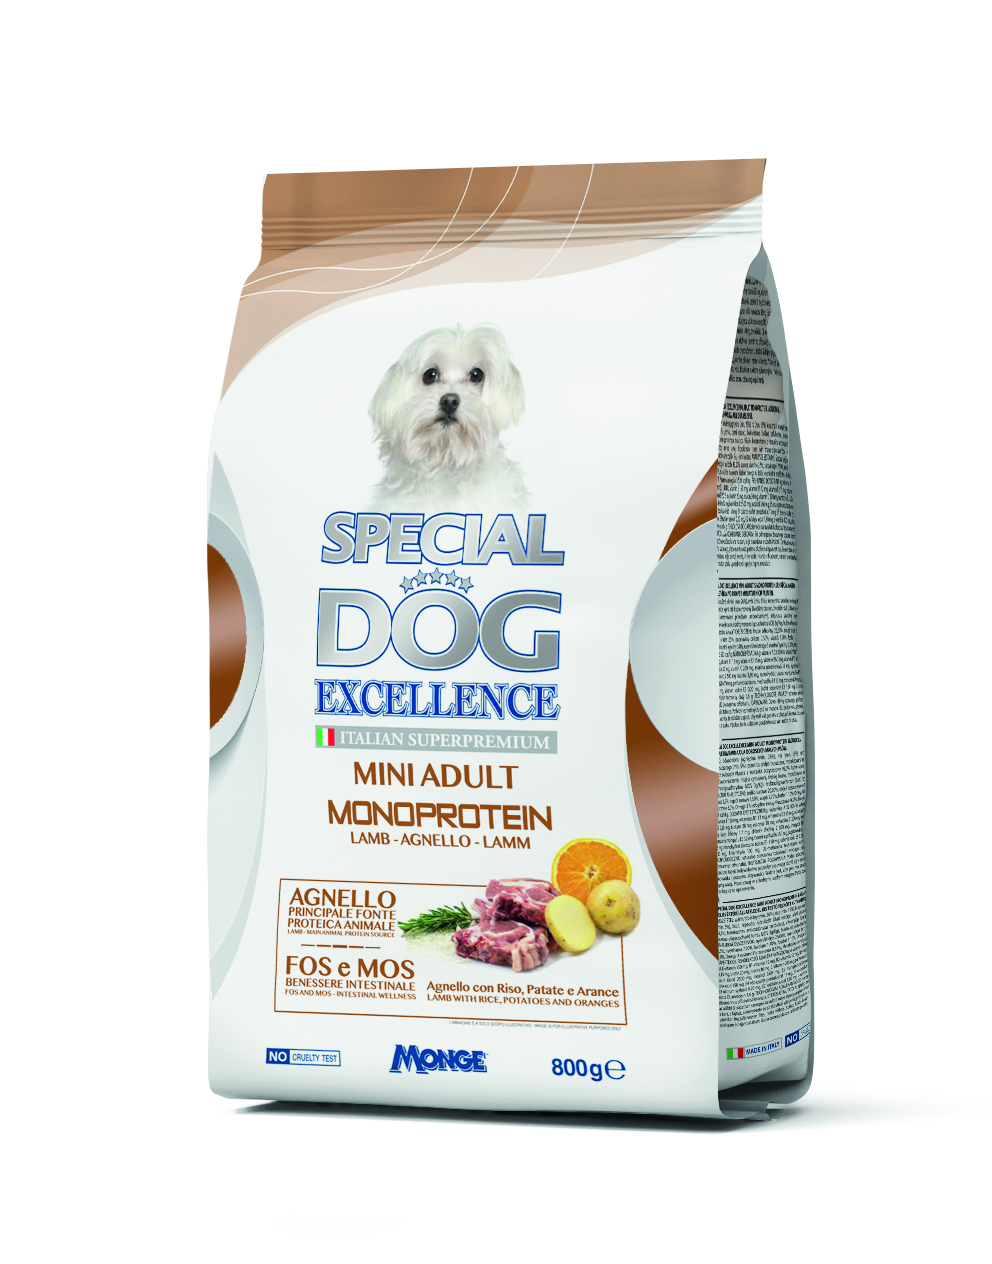 Monge: special dog excellence, mini adult agnello monoproteico